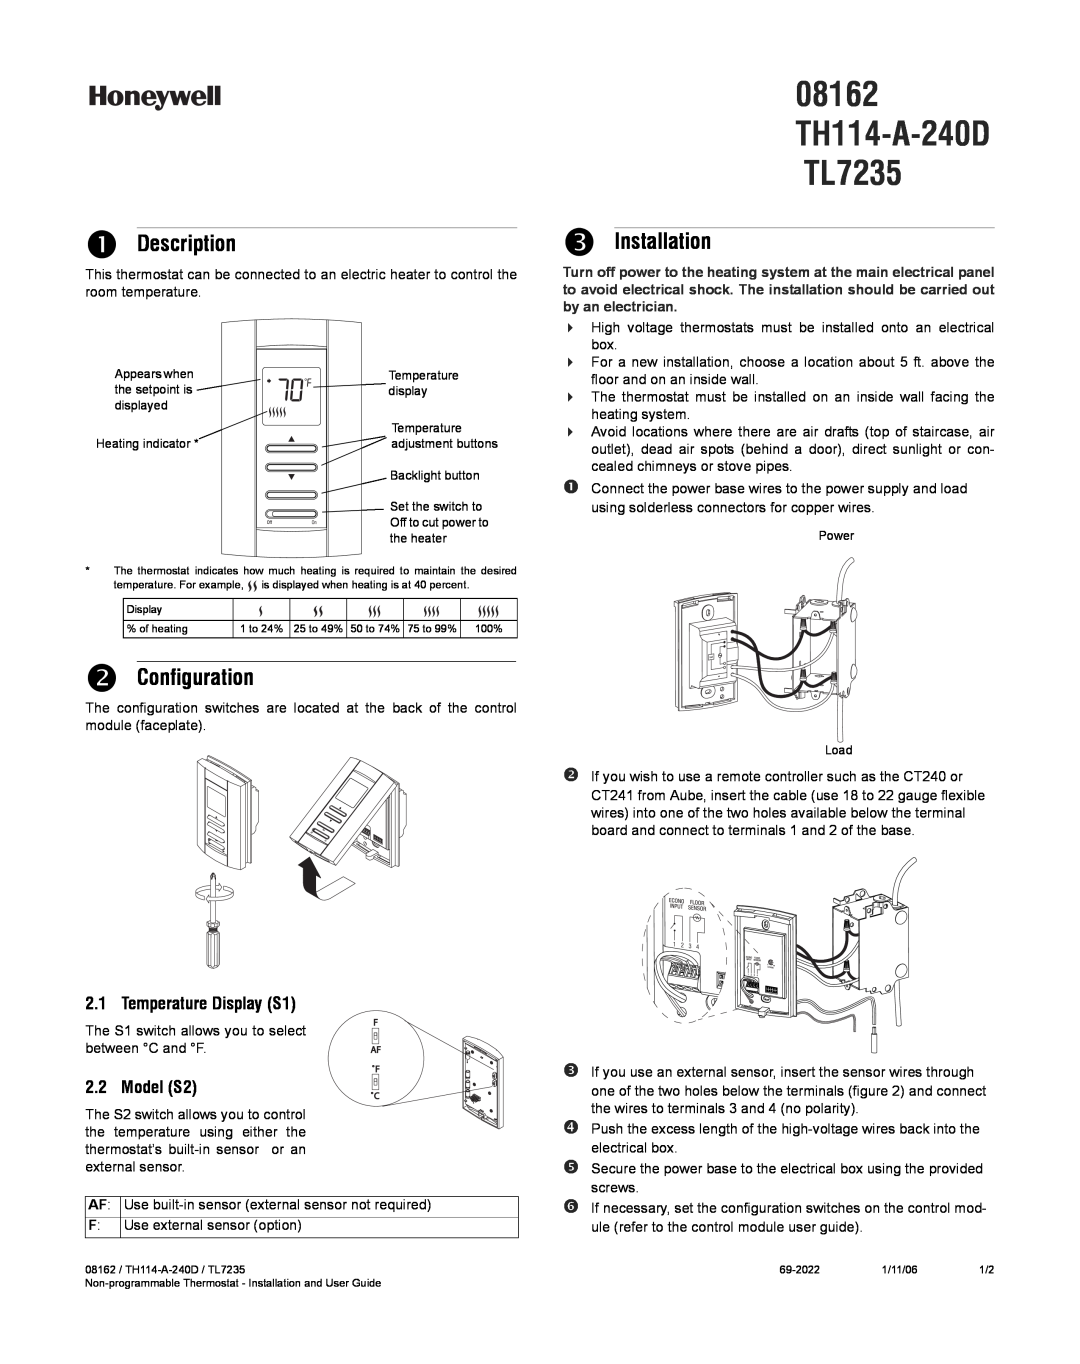 Honeywell manual n Description, p Installation, o Configuration, 08162 TH114-A-240D TL7235, Temperature Display S1 